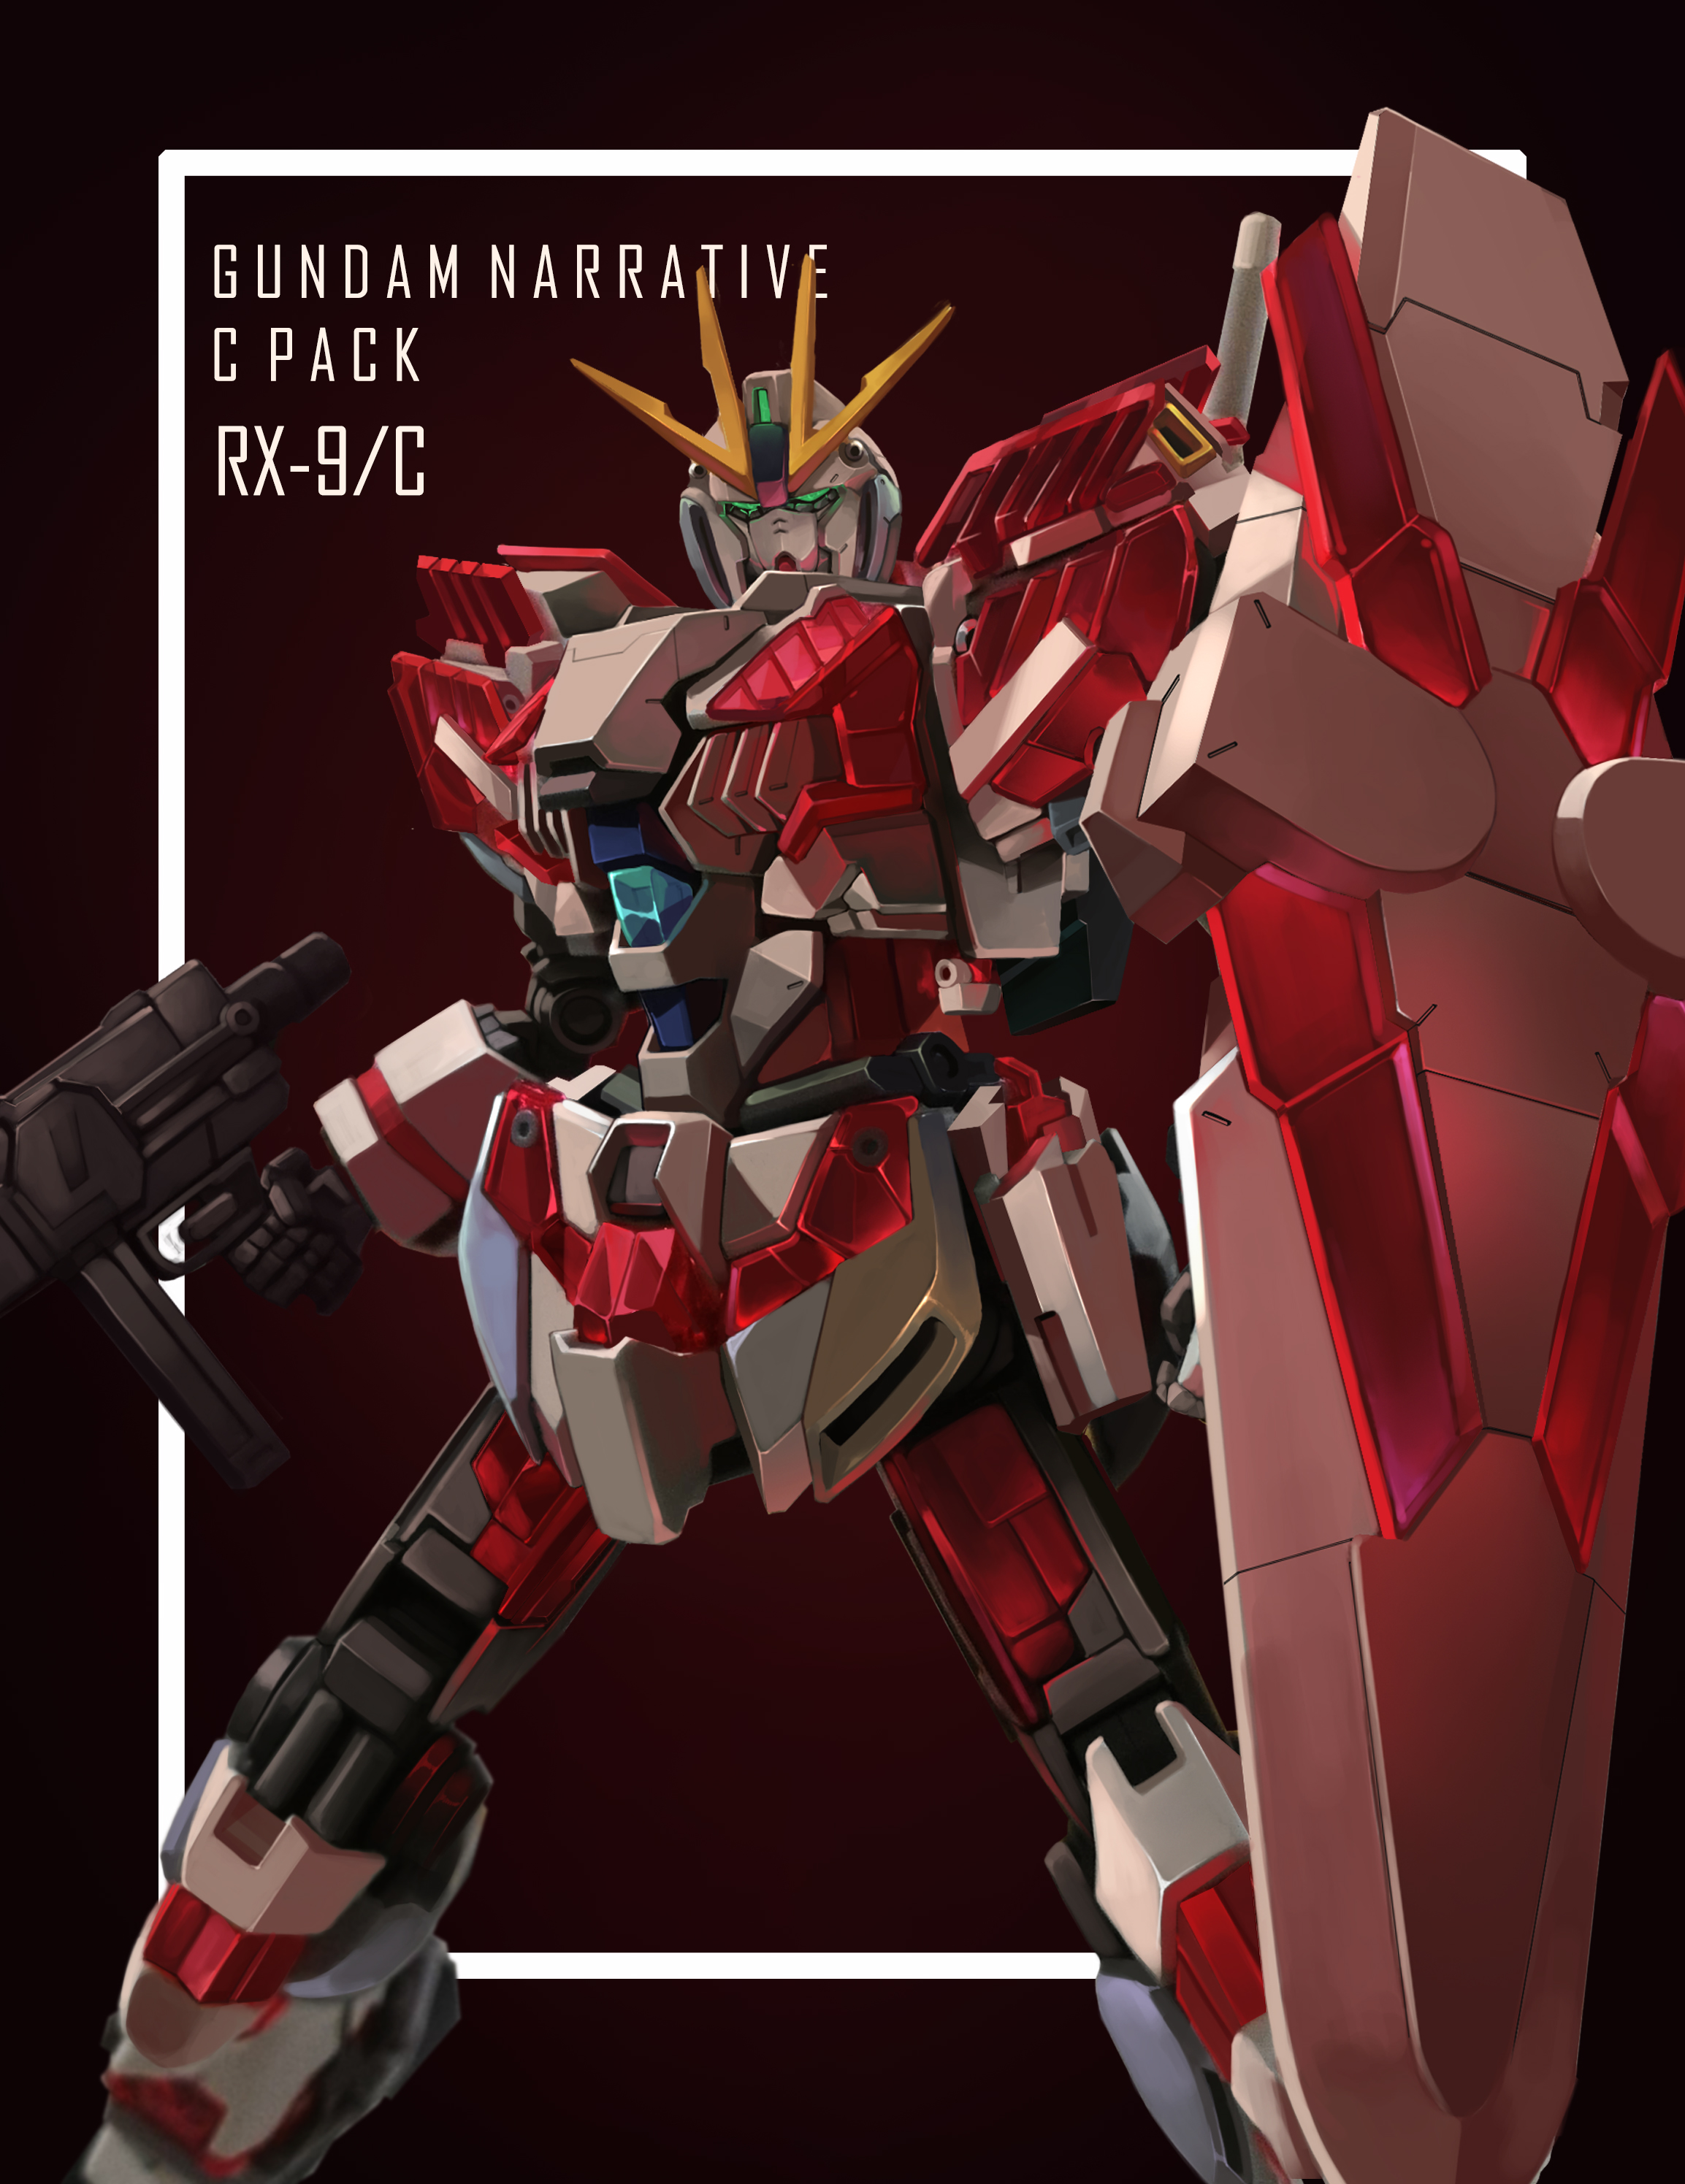 Narrative Gundam C Packs Mobile Suit Gundam NT Narrative Artwork Digital Art Fan Art Anime Mech Gund 2307x2991